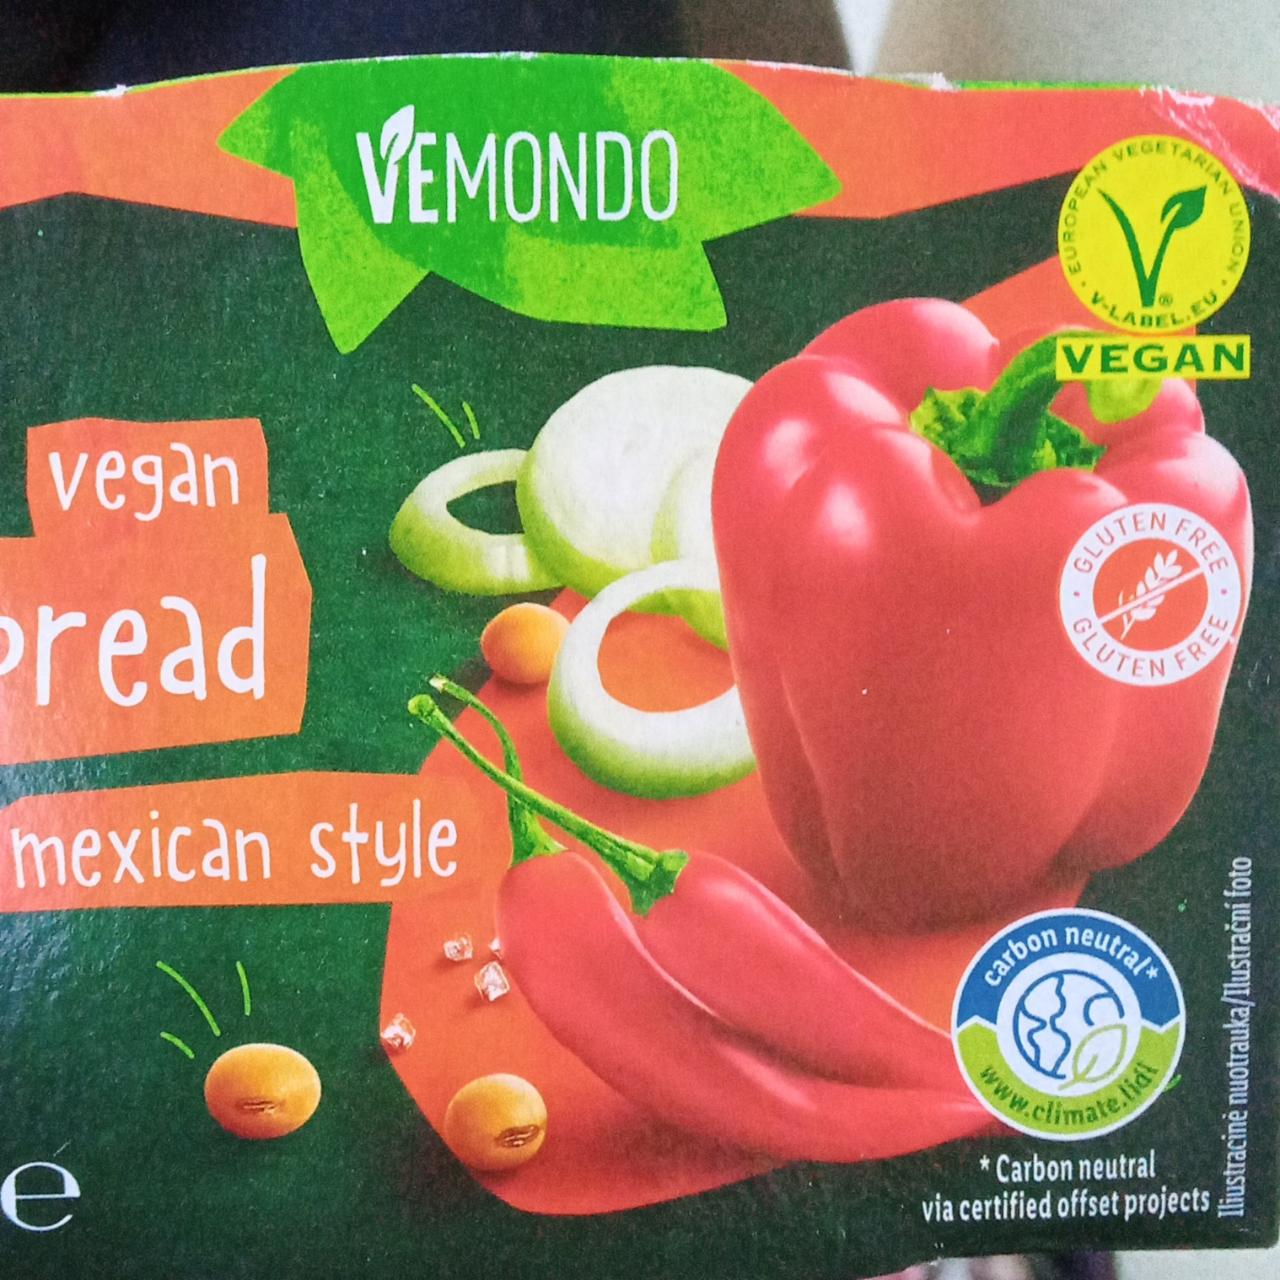 Fotografie - Vegan spread mexican style Vemondo